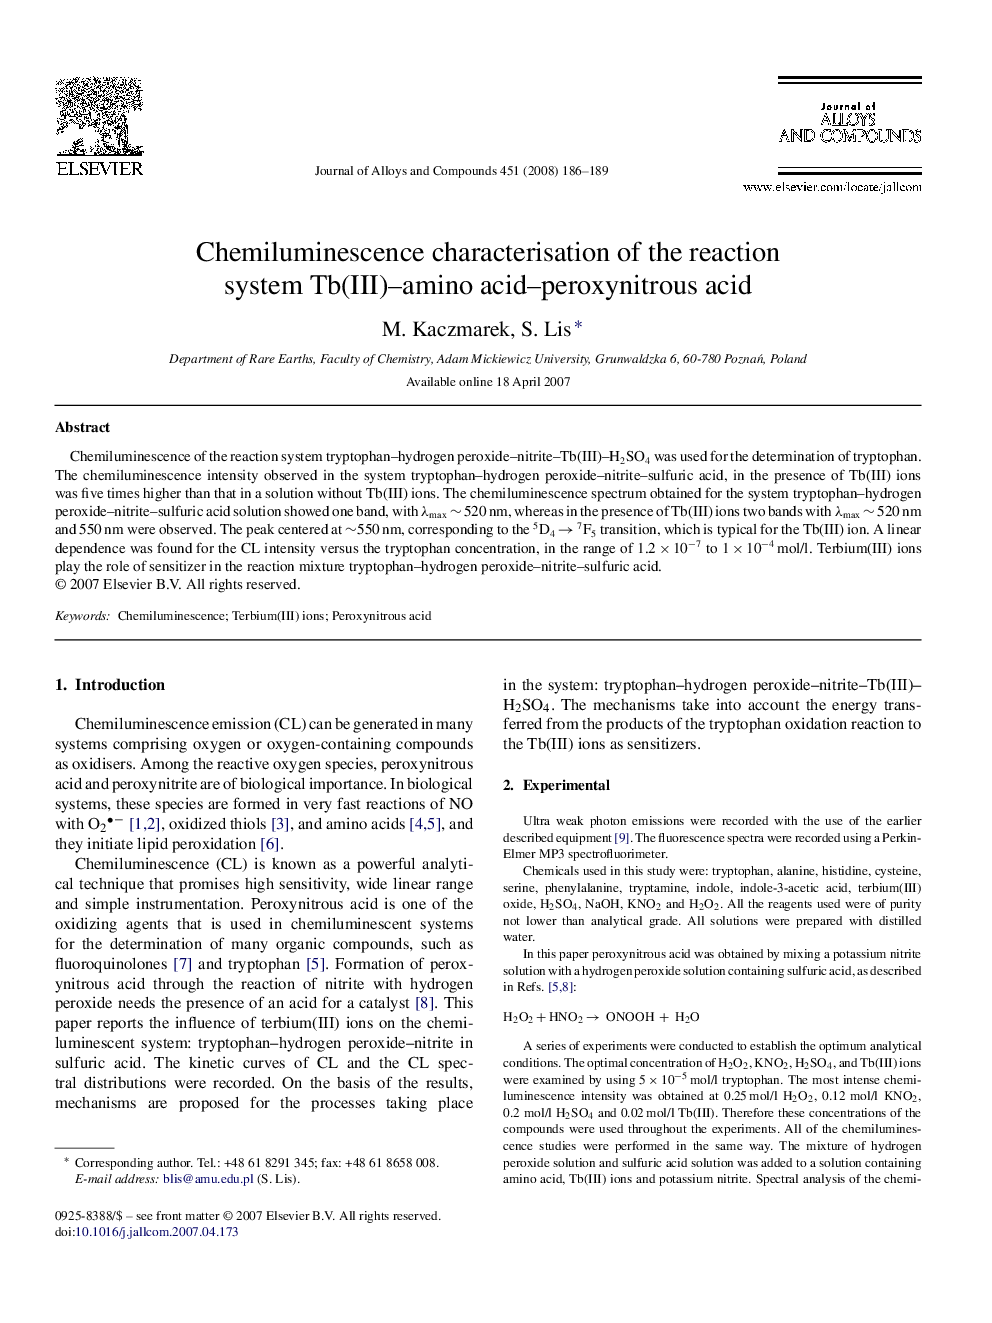 Chemiluminescence characterisation of the reaction system Tb(III)-amino acid-peroxynitrous acid